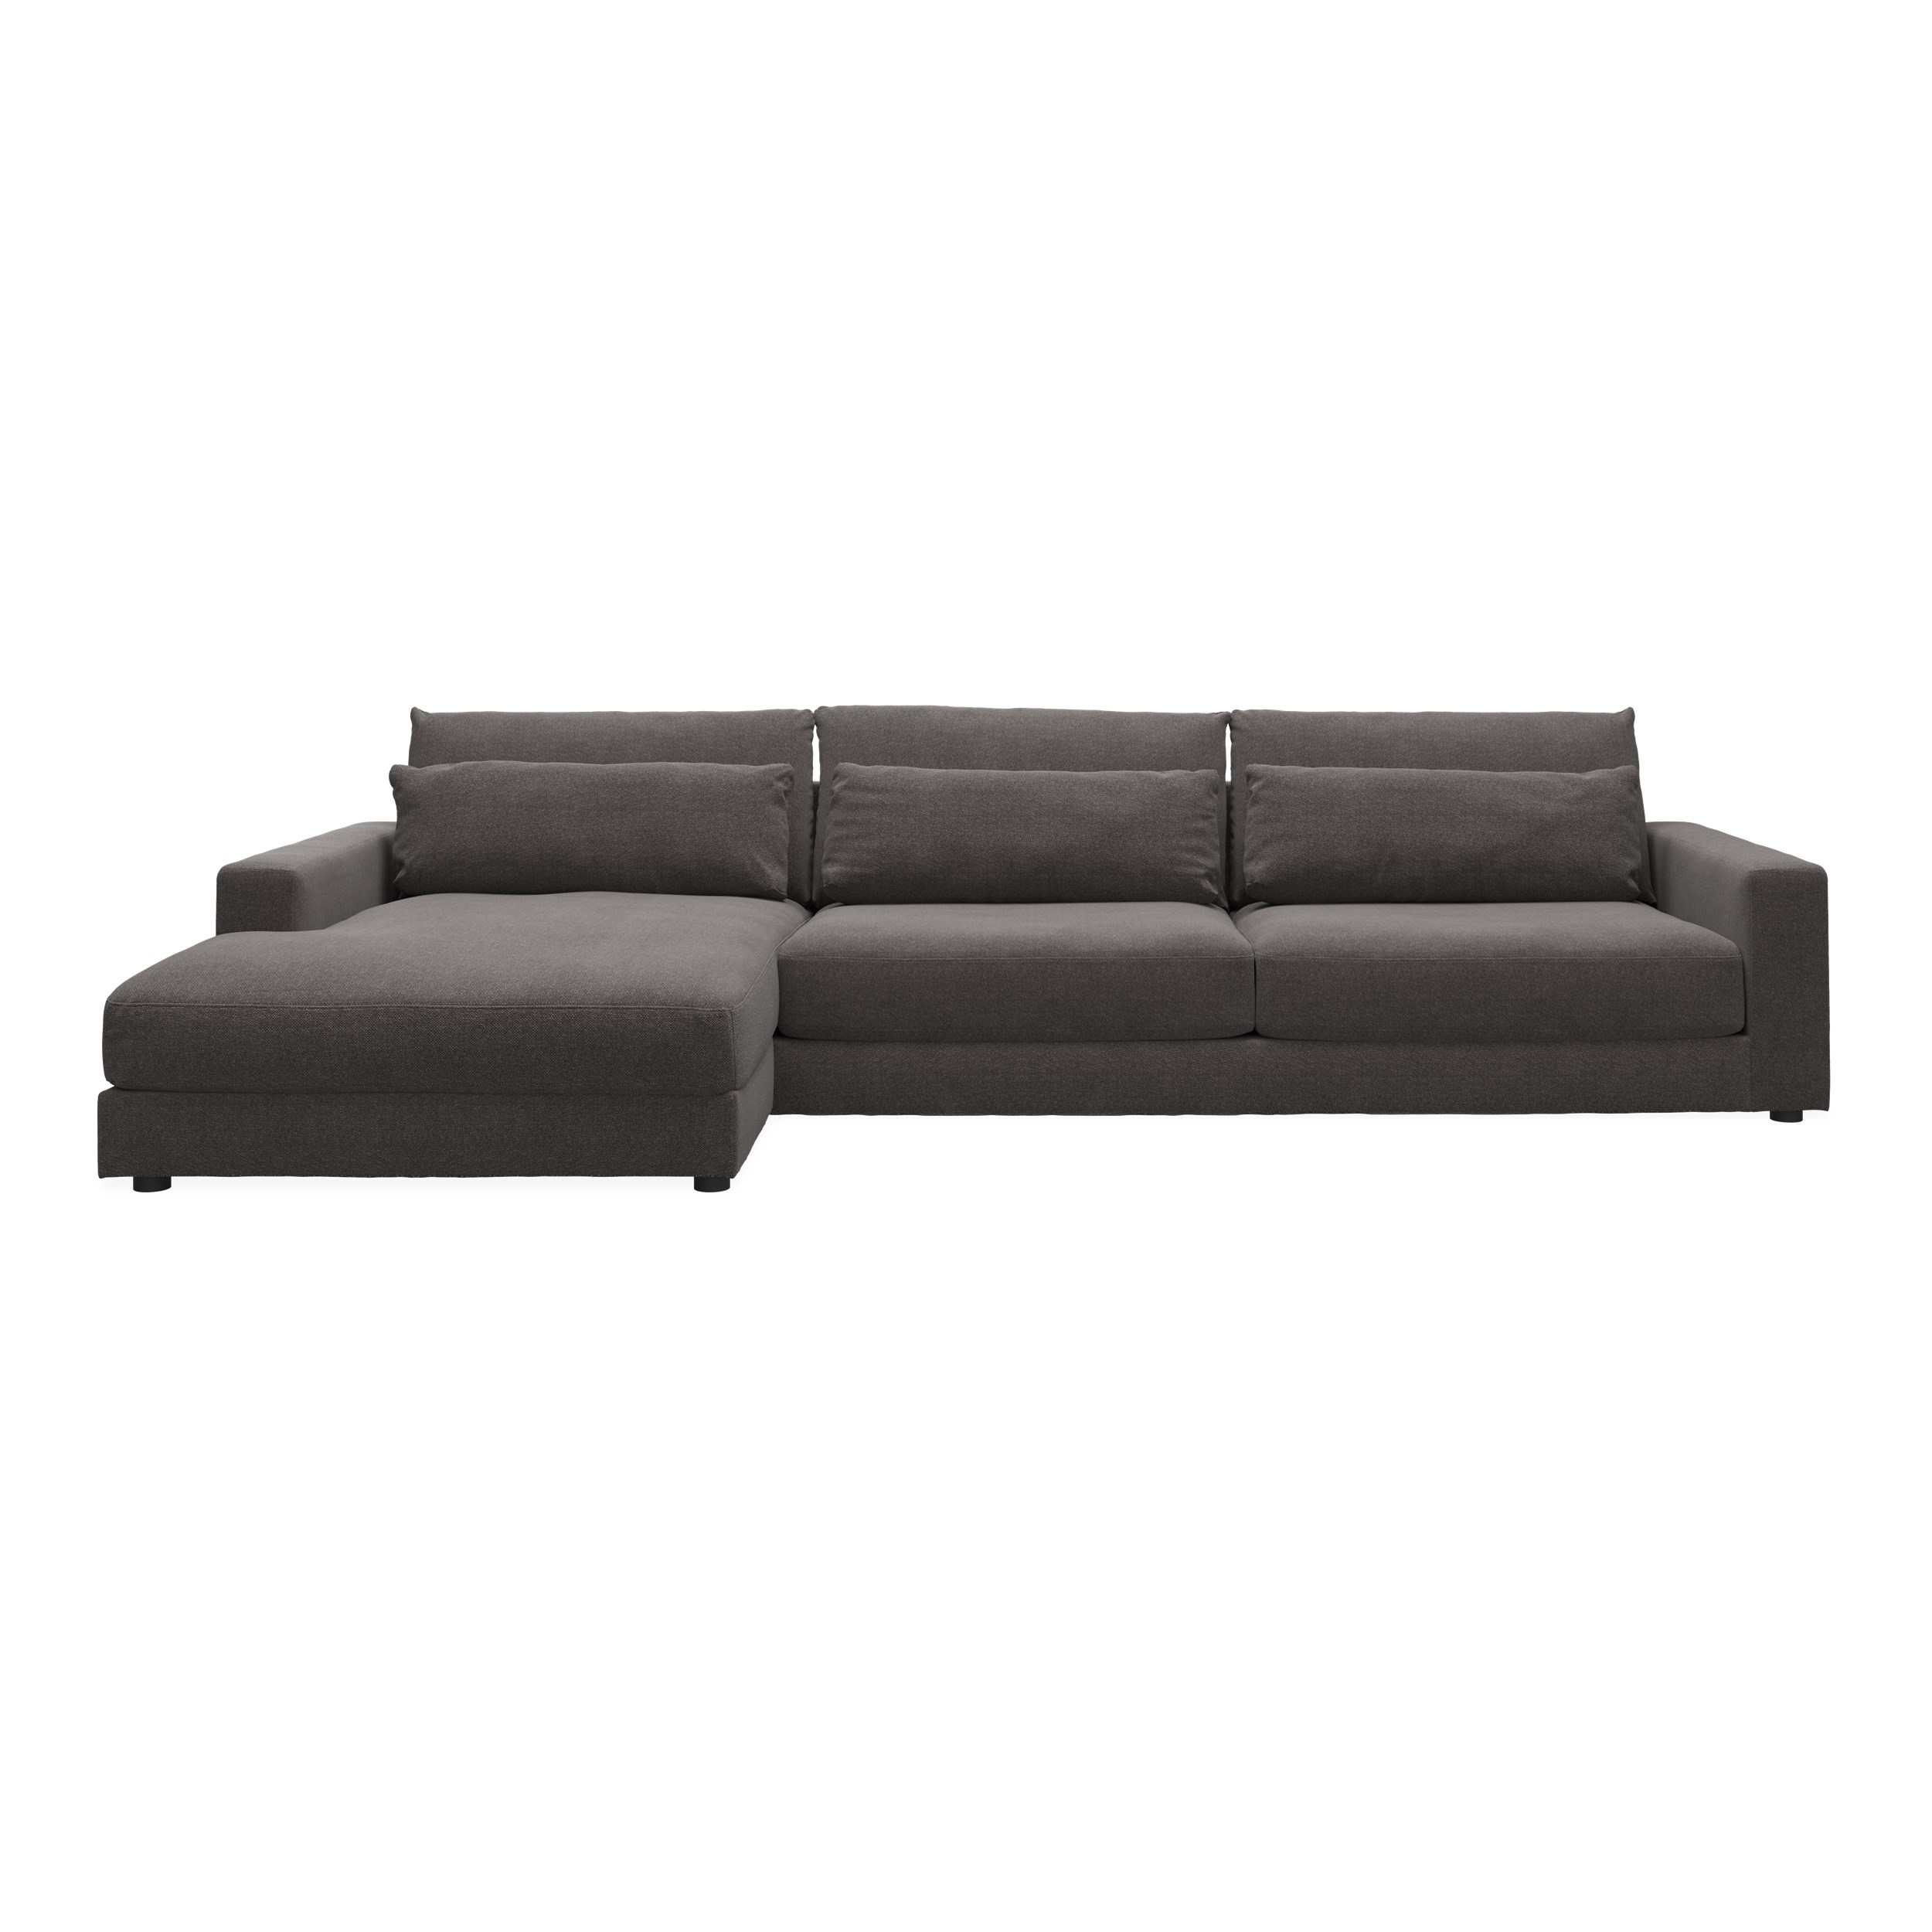 Halmstad Sofa med chaiselong - Rate 68 Dark grey stof og ben i sort plast